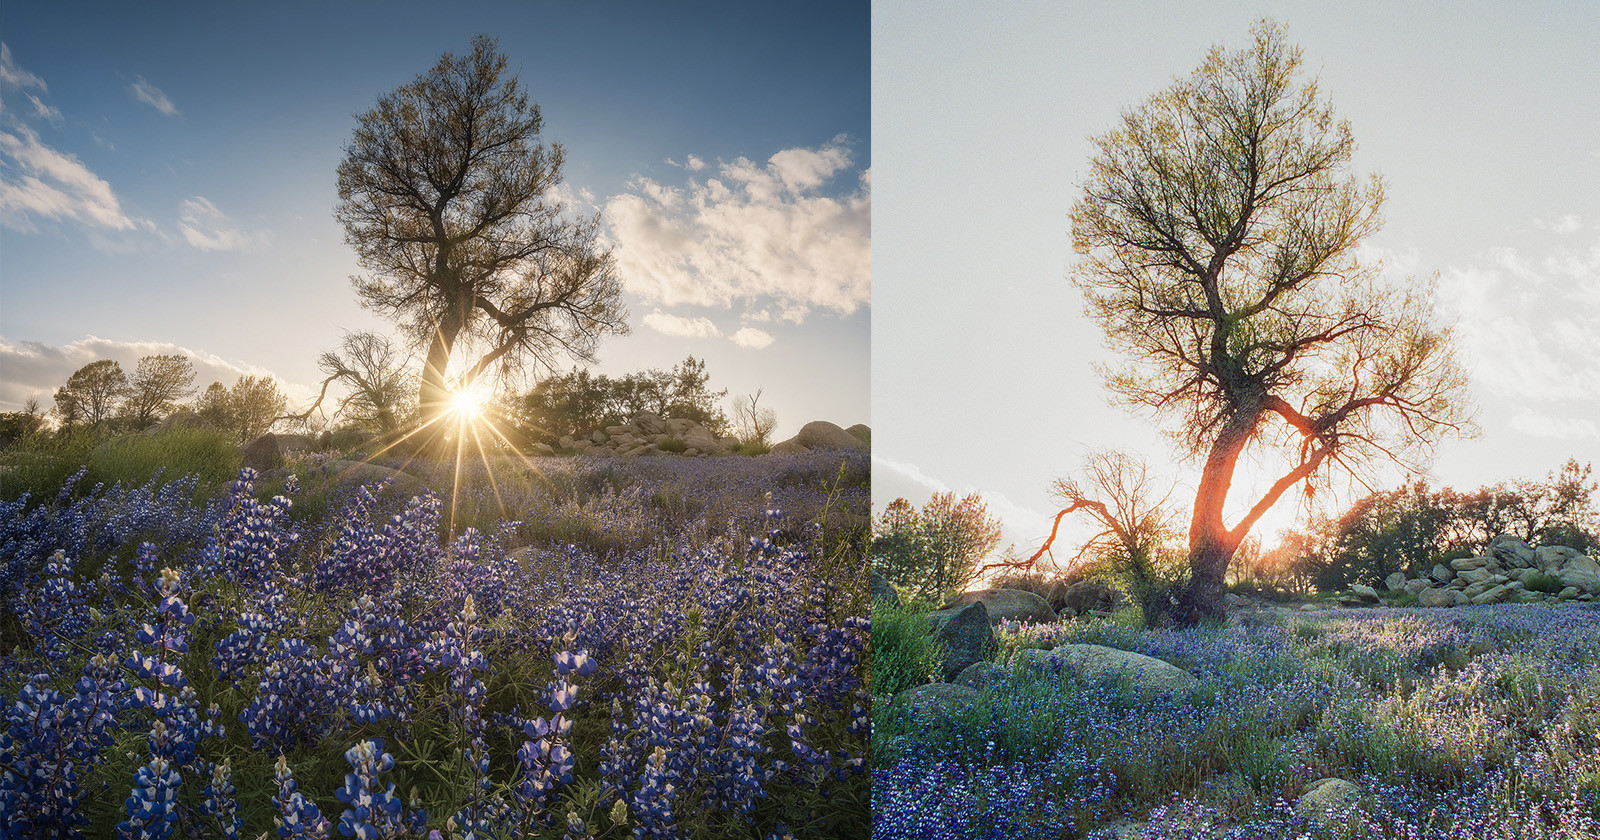  how photograph blooming wildflowers digital film cameras 